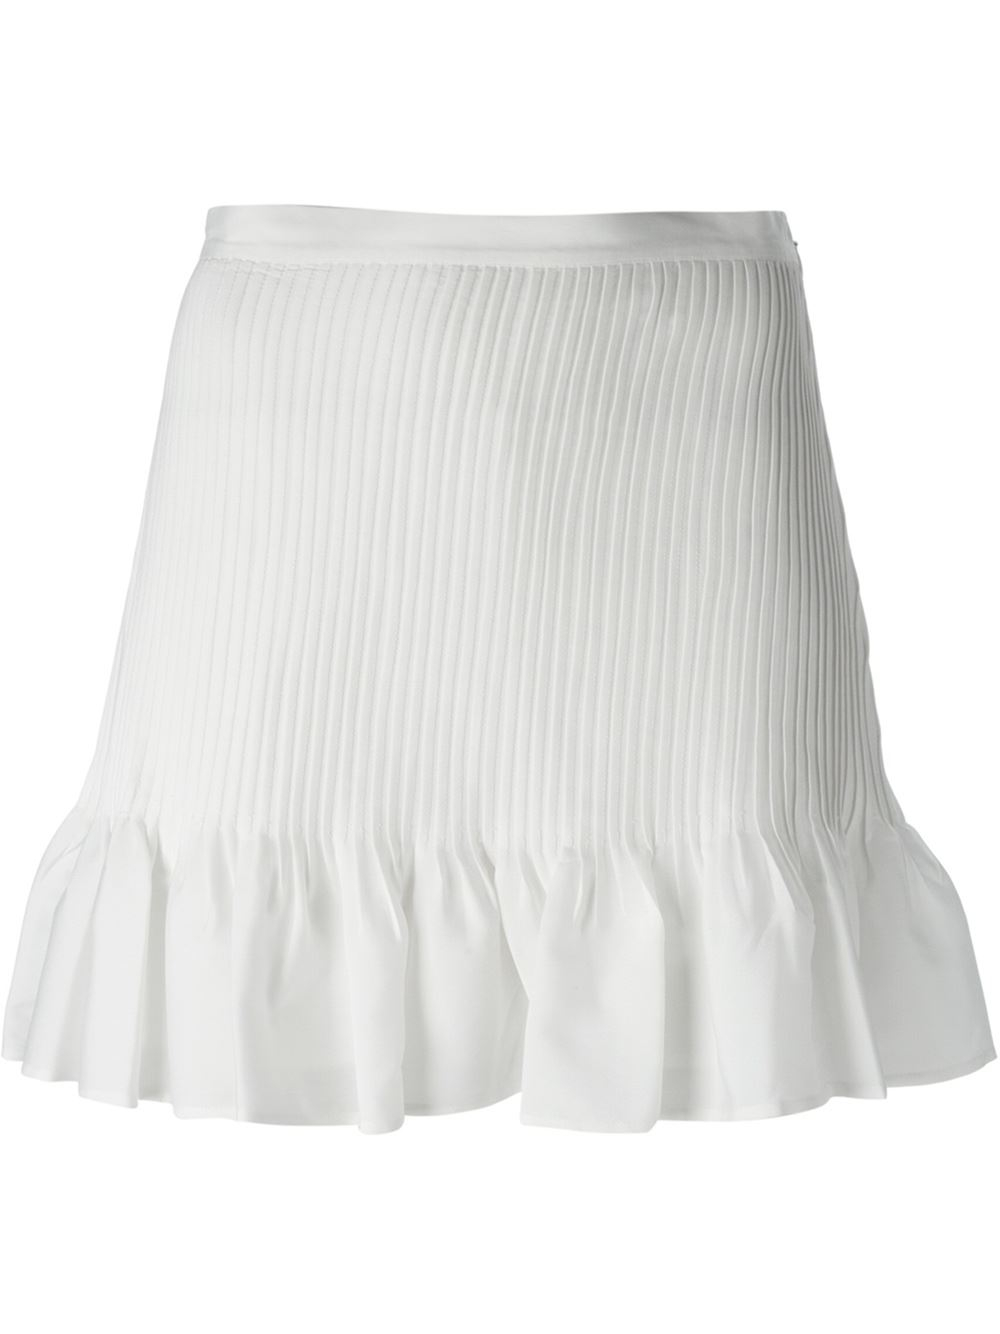 Vanessa Bruno Ruffled Hem Skirt in White | Lyst